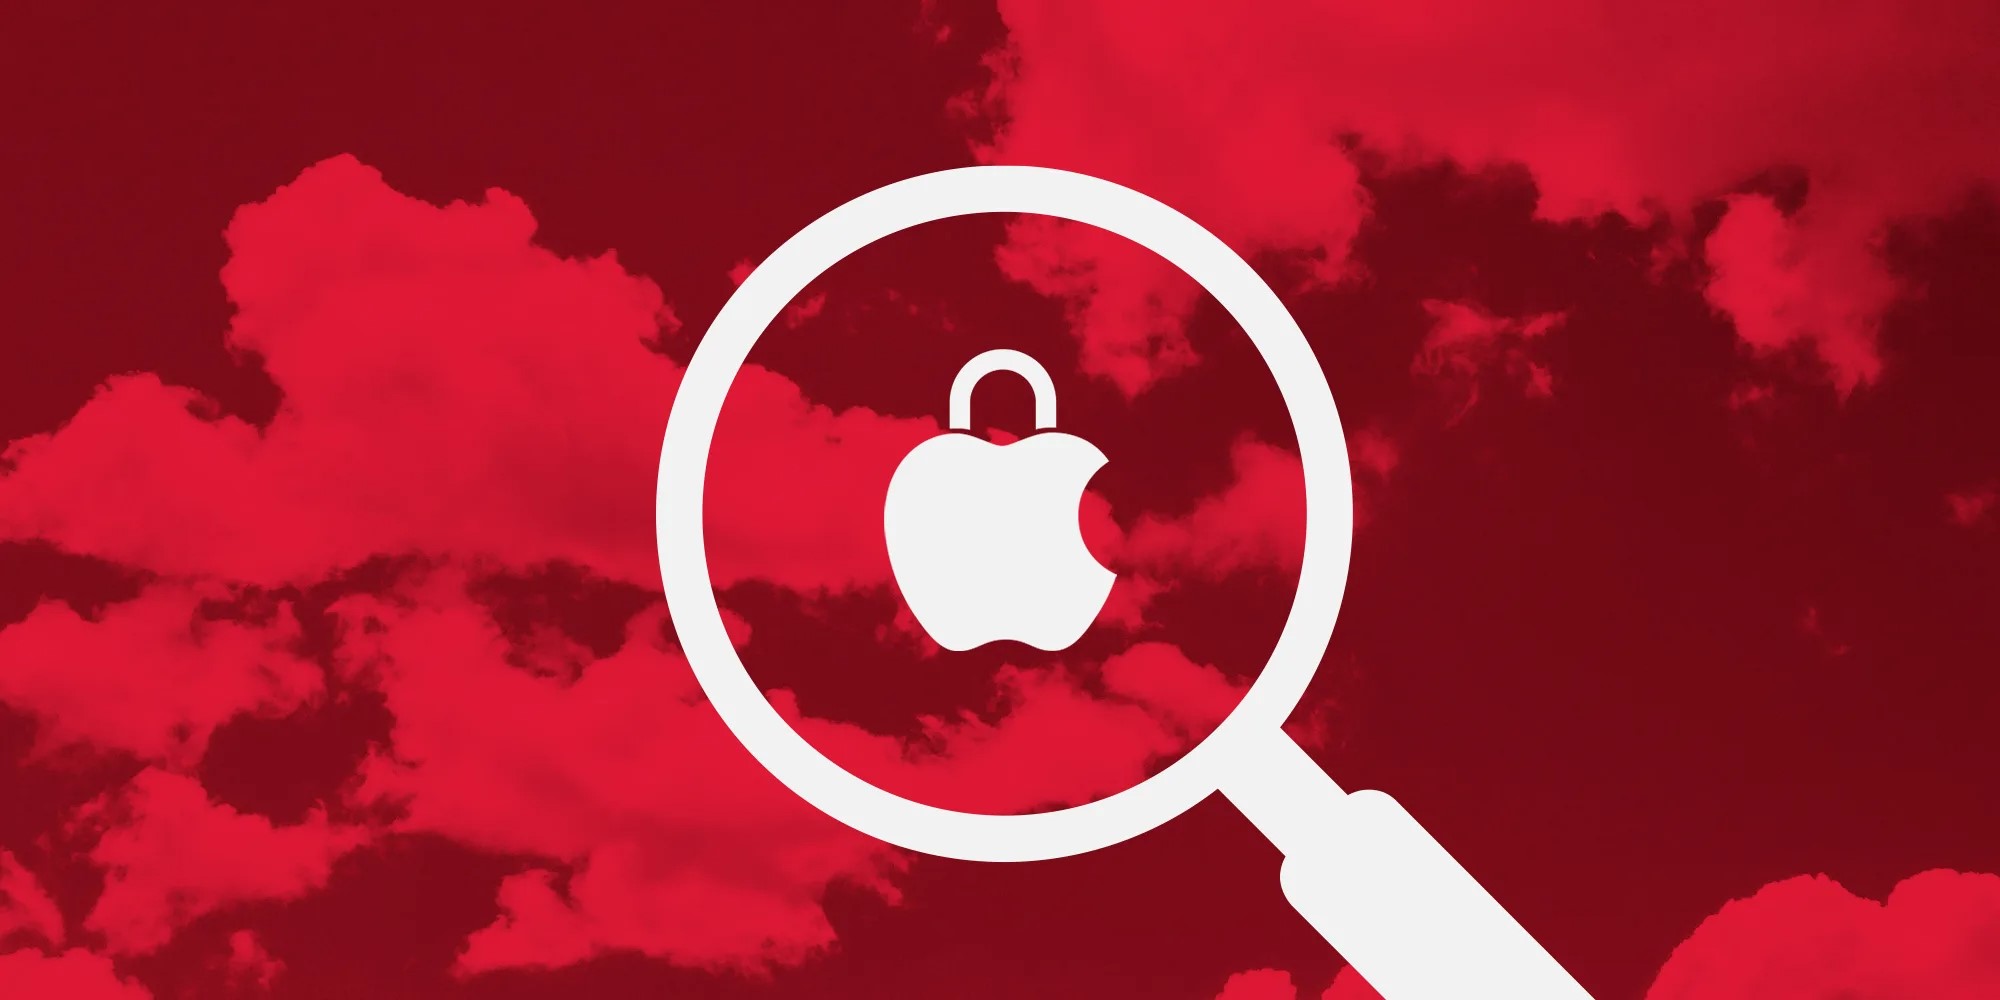 apple_m1_pac_mit_pacman_security_unpatchable_tinhte-1.jpg